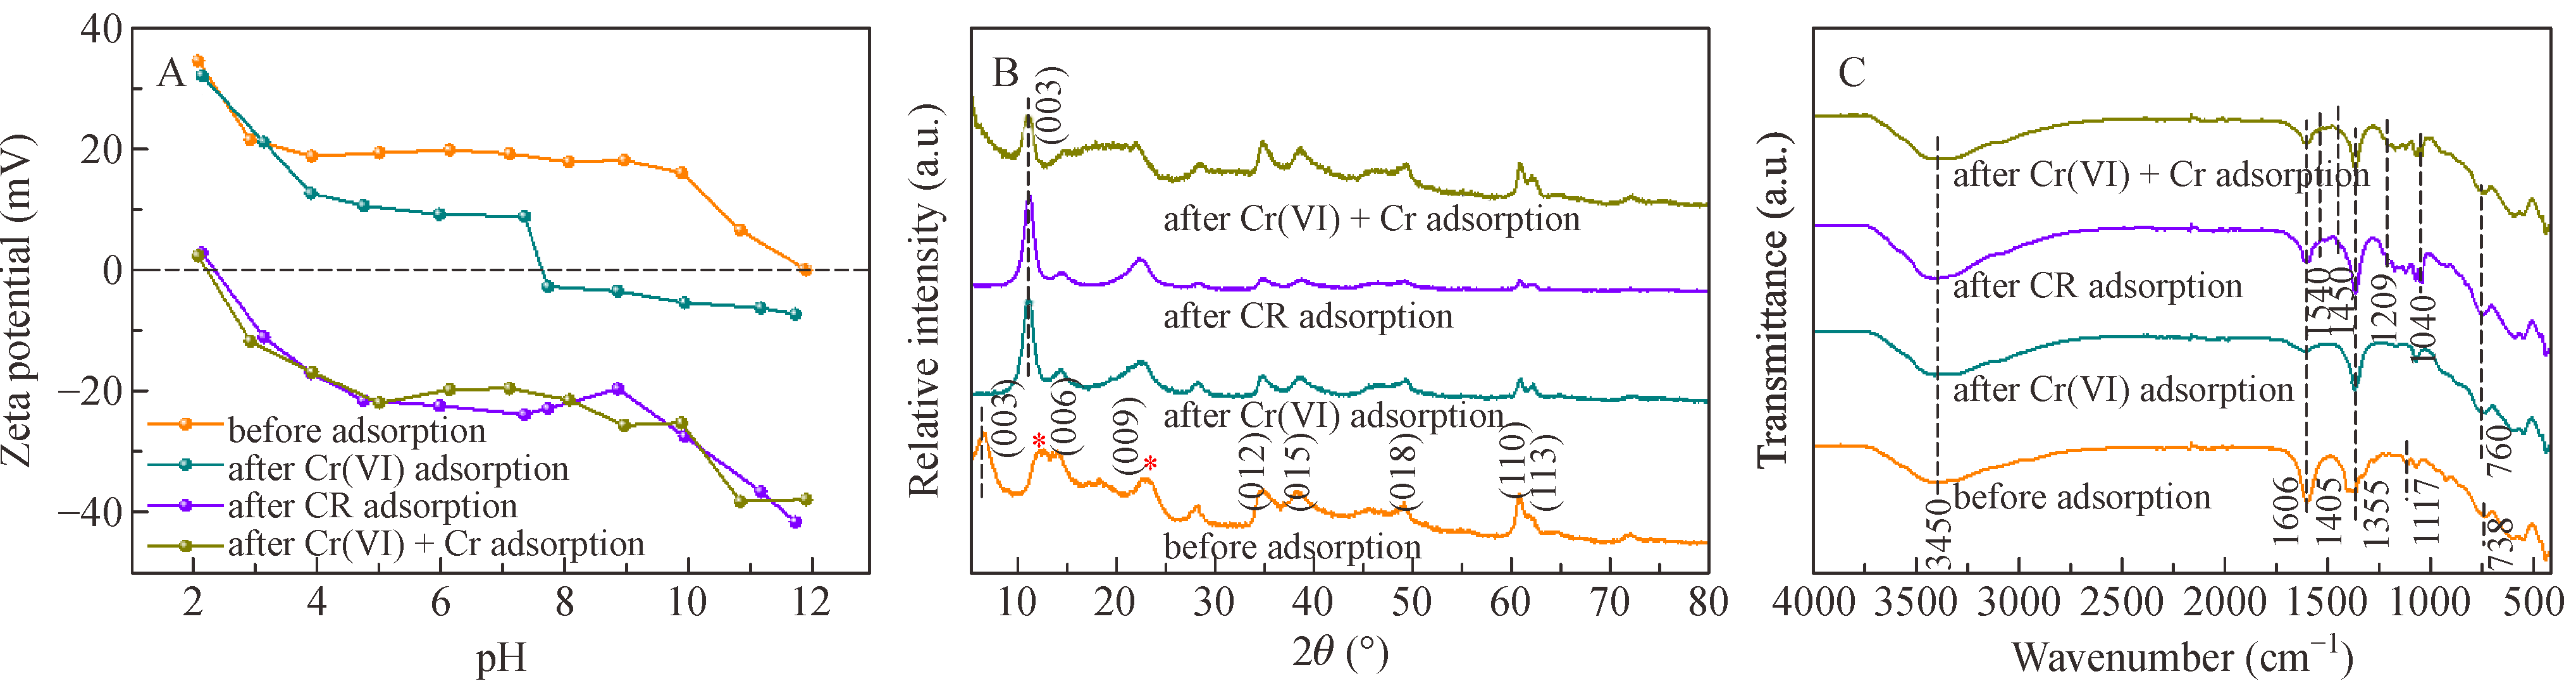 XRD patterns of (a) Zn-Al-3 after IC adsorption, (b) c-Zn 